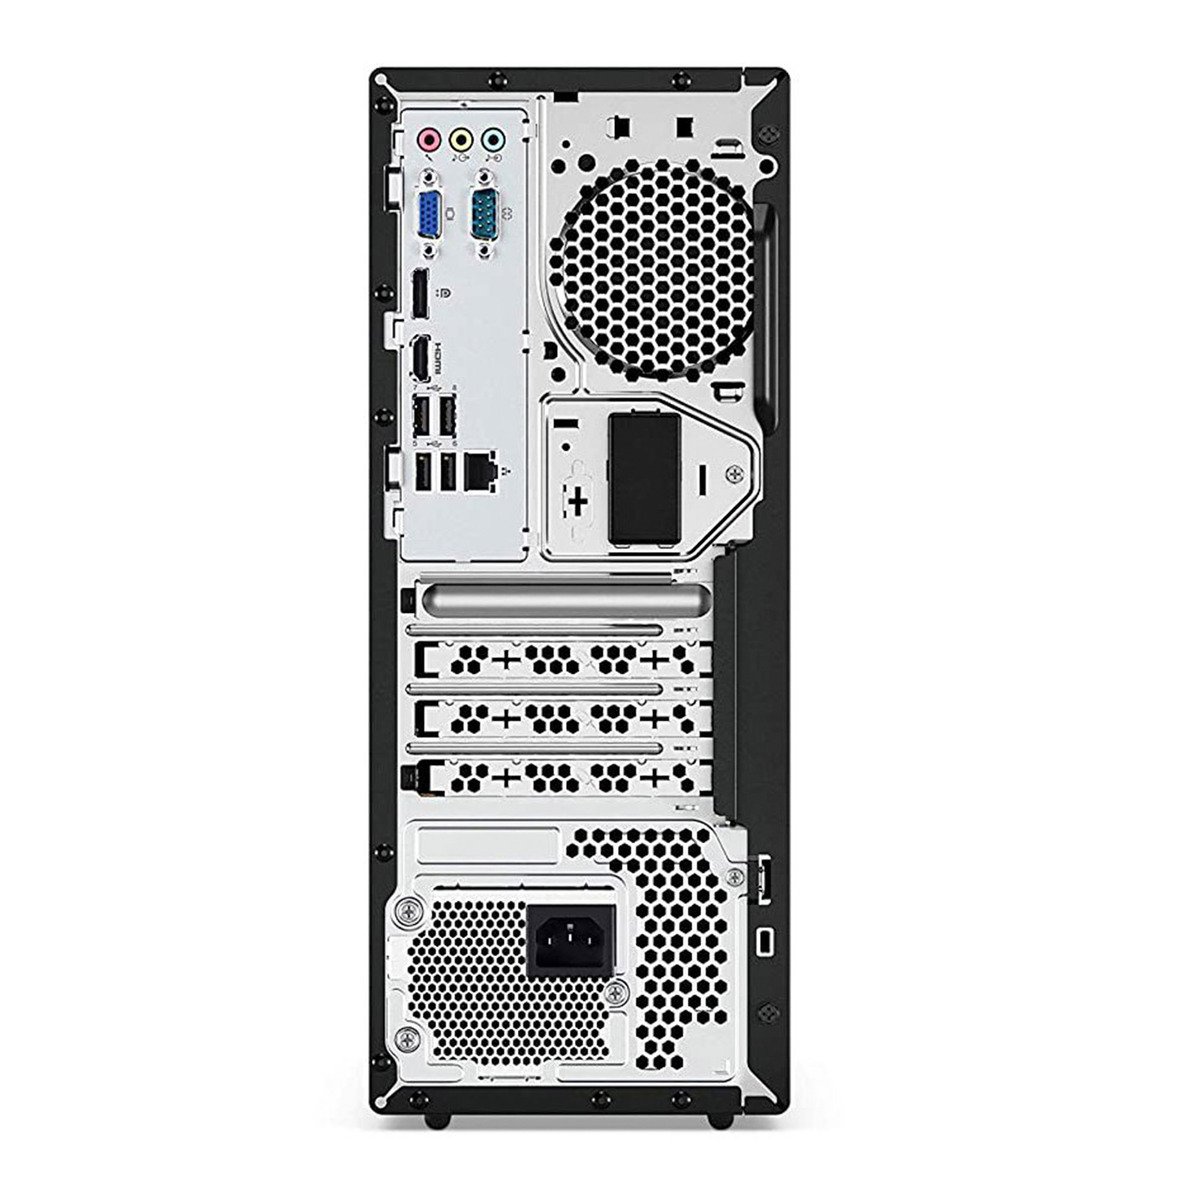 Lenovo V530 Tower-11BH001XAX,Intel Core i5-9400,4GB RAM DDR4,1TB HDD,Integrated Graphics,Windows 10 Pro